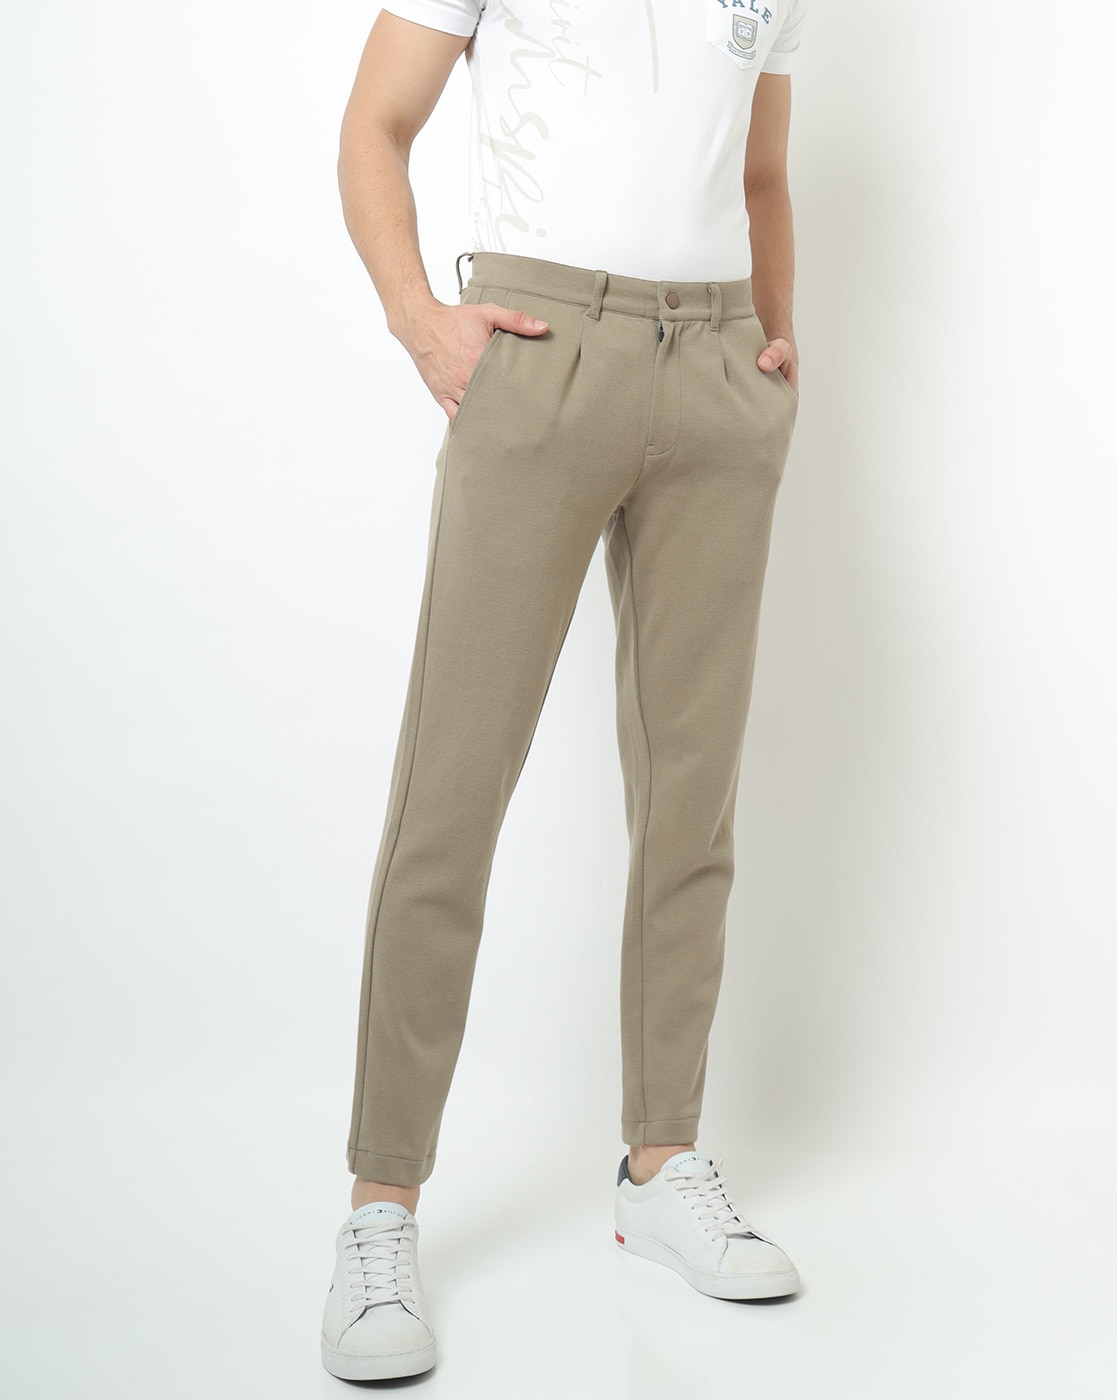 UNICOR Shopping Khaki Button Fly Pants